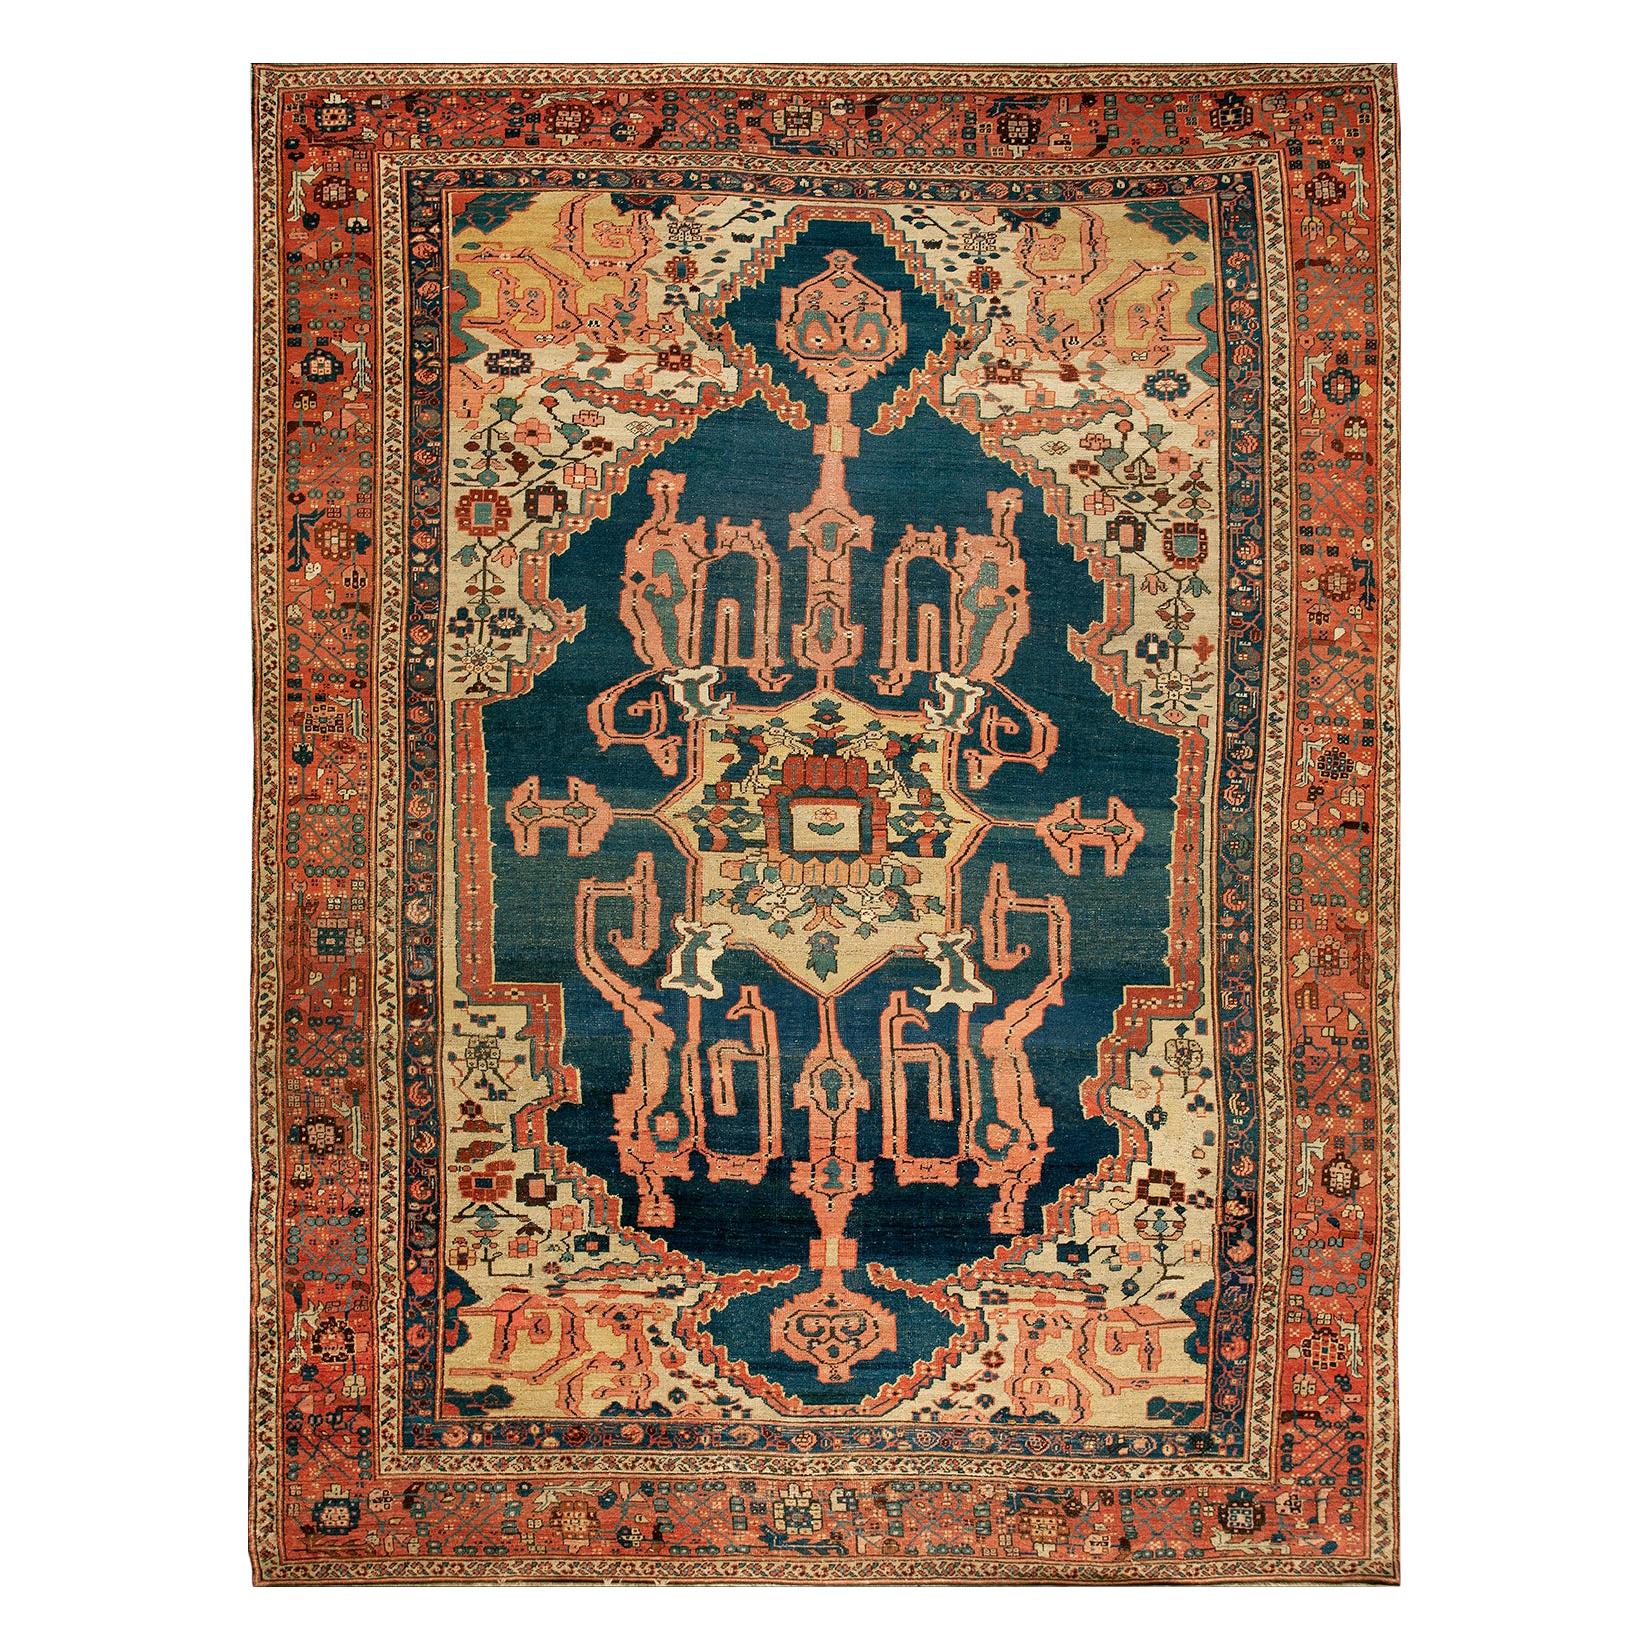 19th Century N.W. Persian Bakshaiesh Carpet ( 9' x 12' - 274 x 366 )